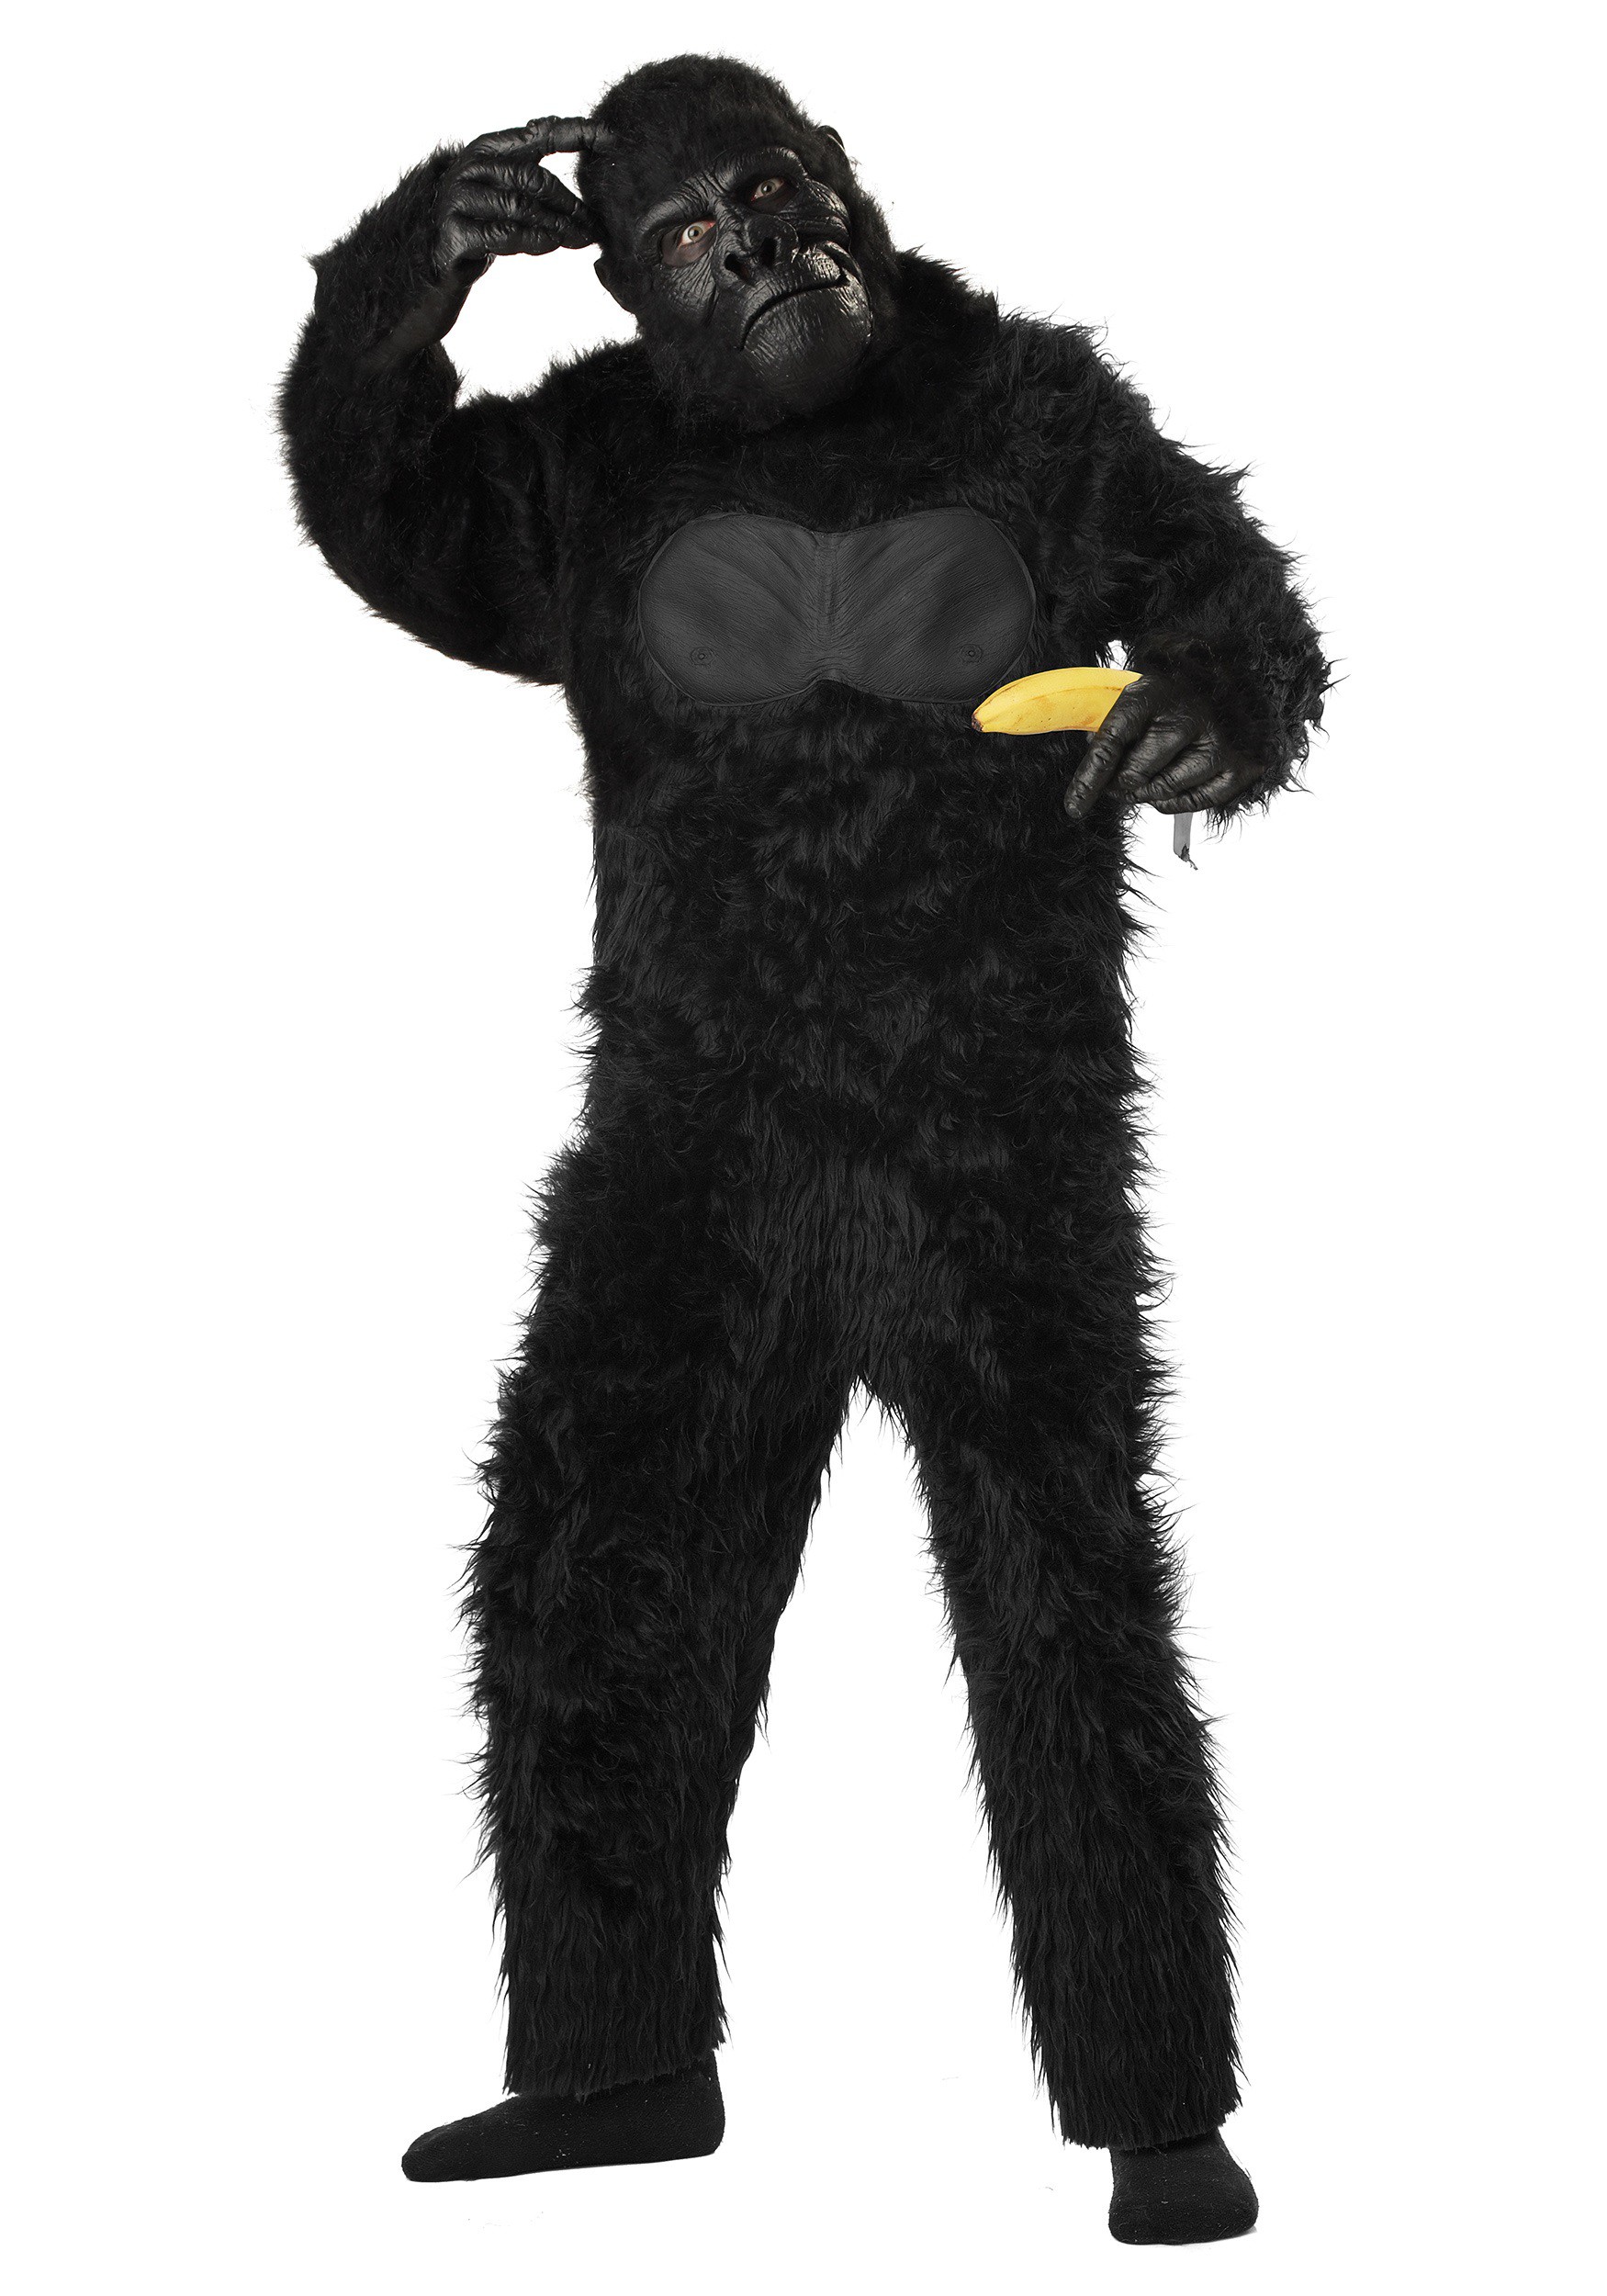 Kids Deluxe Gorilla Costume